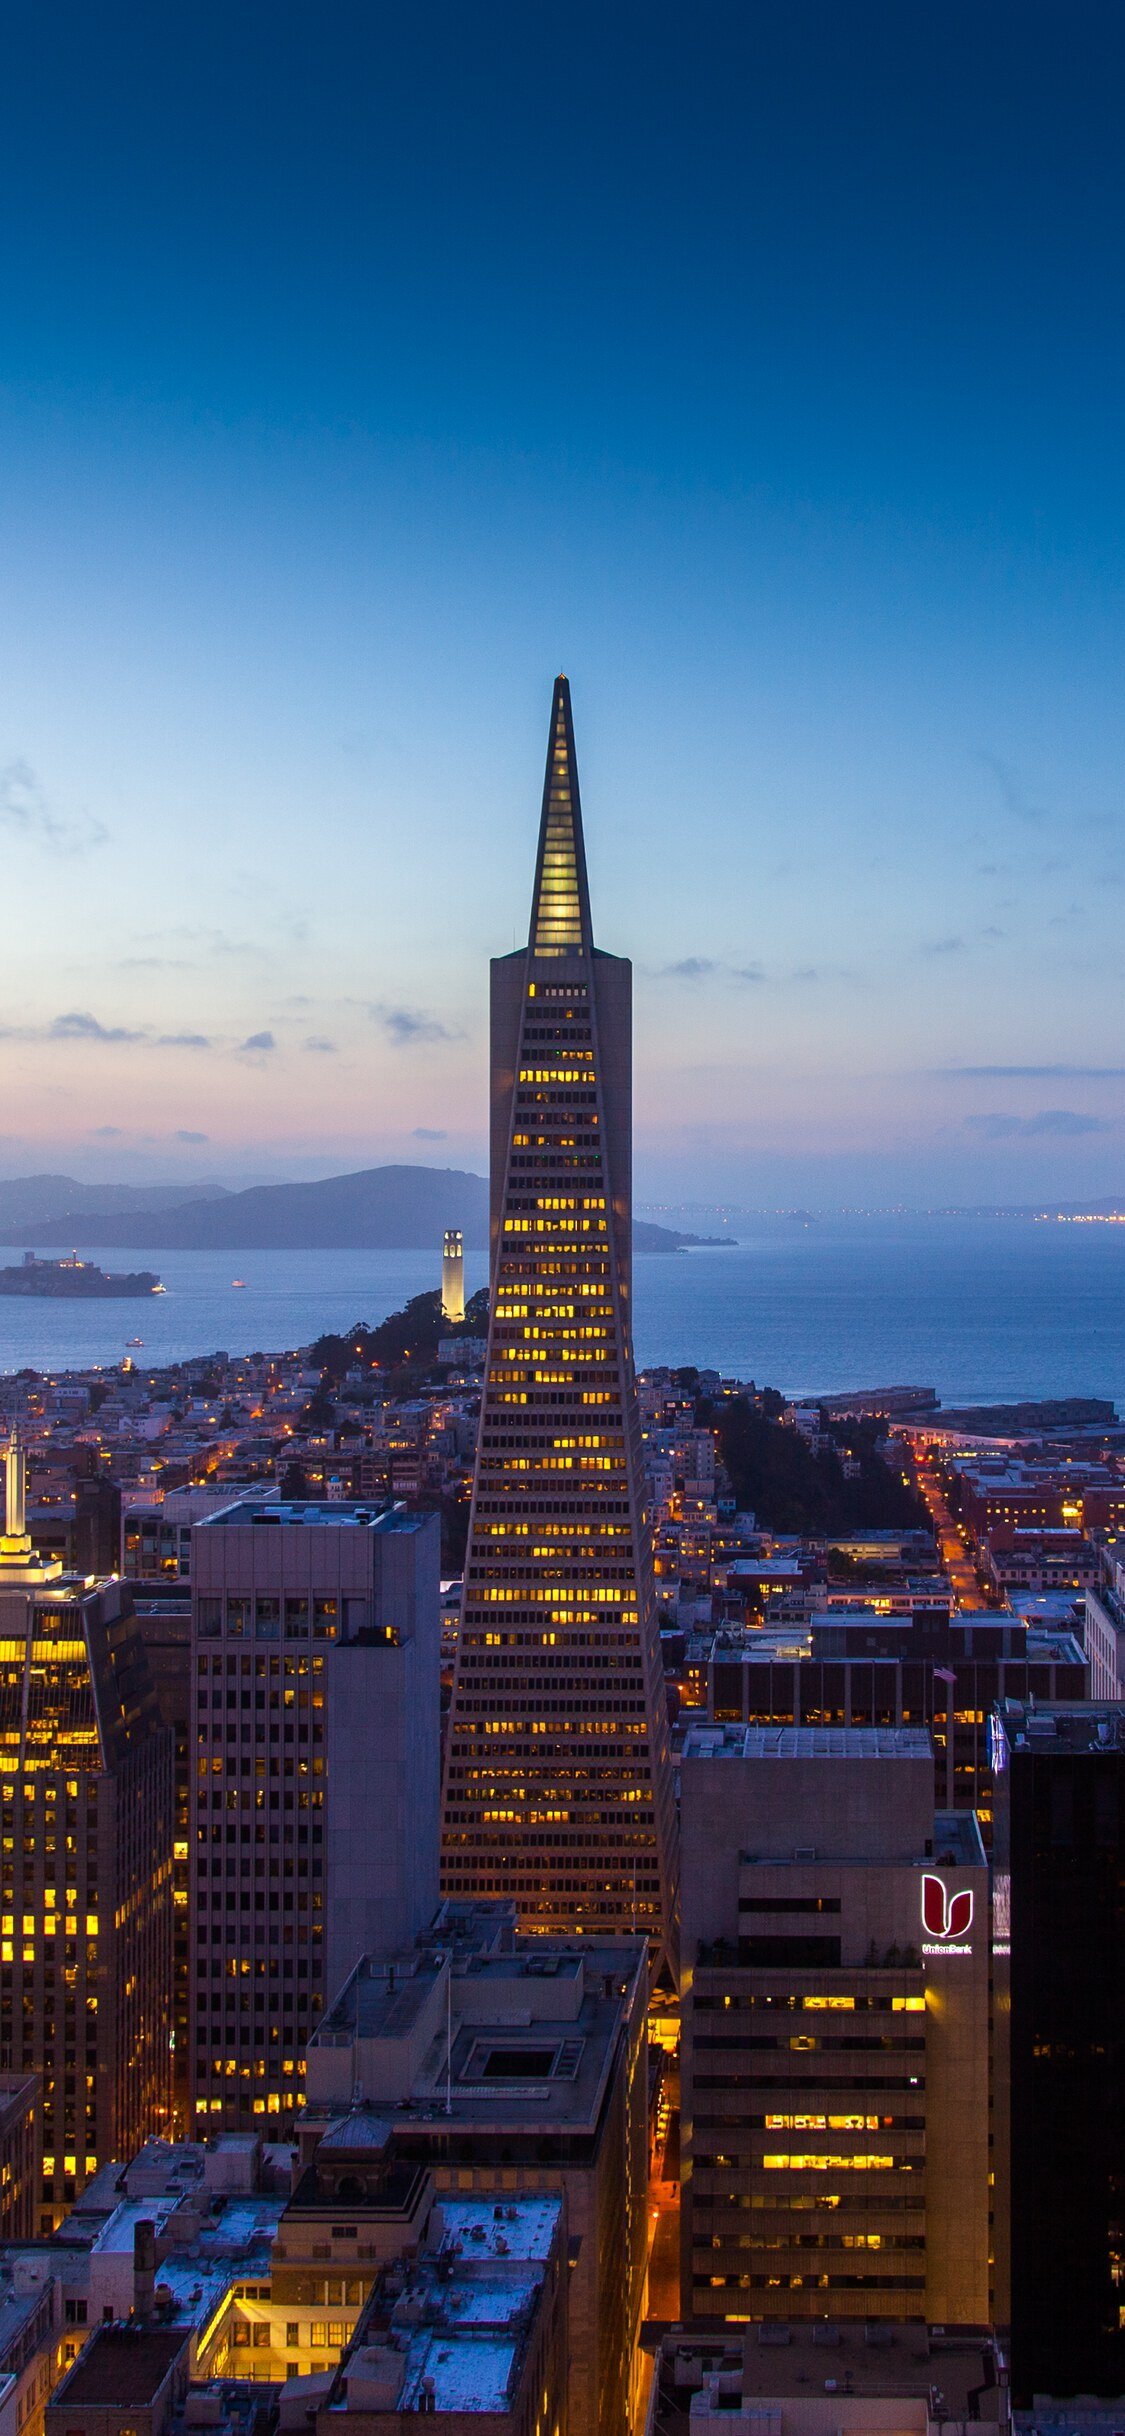 100 San Francisco Pictures Stunning  Download Free Images on Unsplash